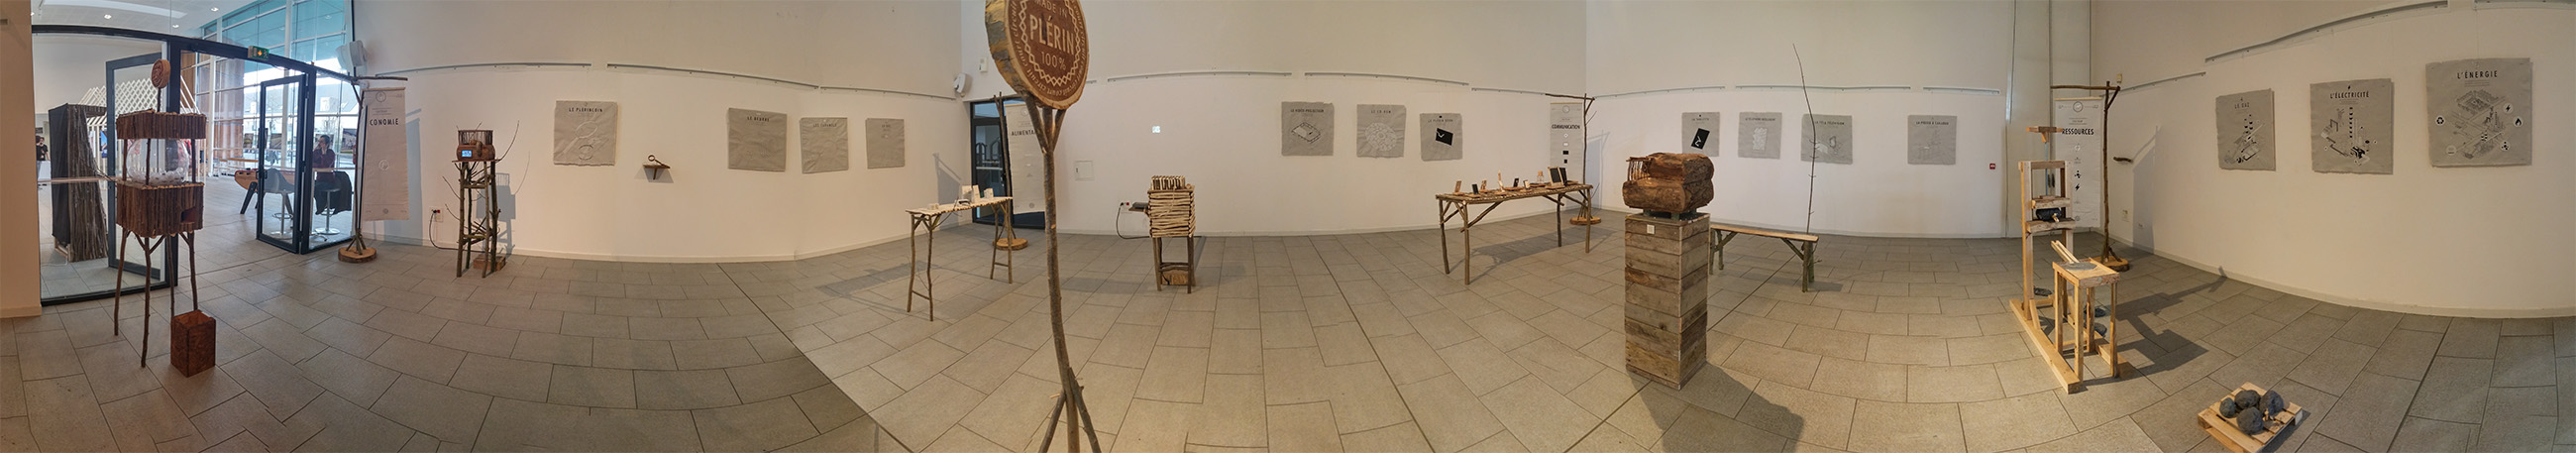 exposition Made in Plérin 2018